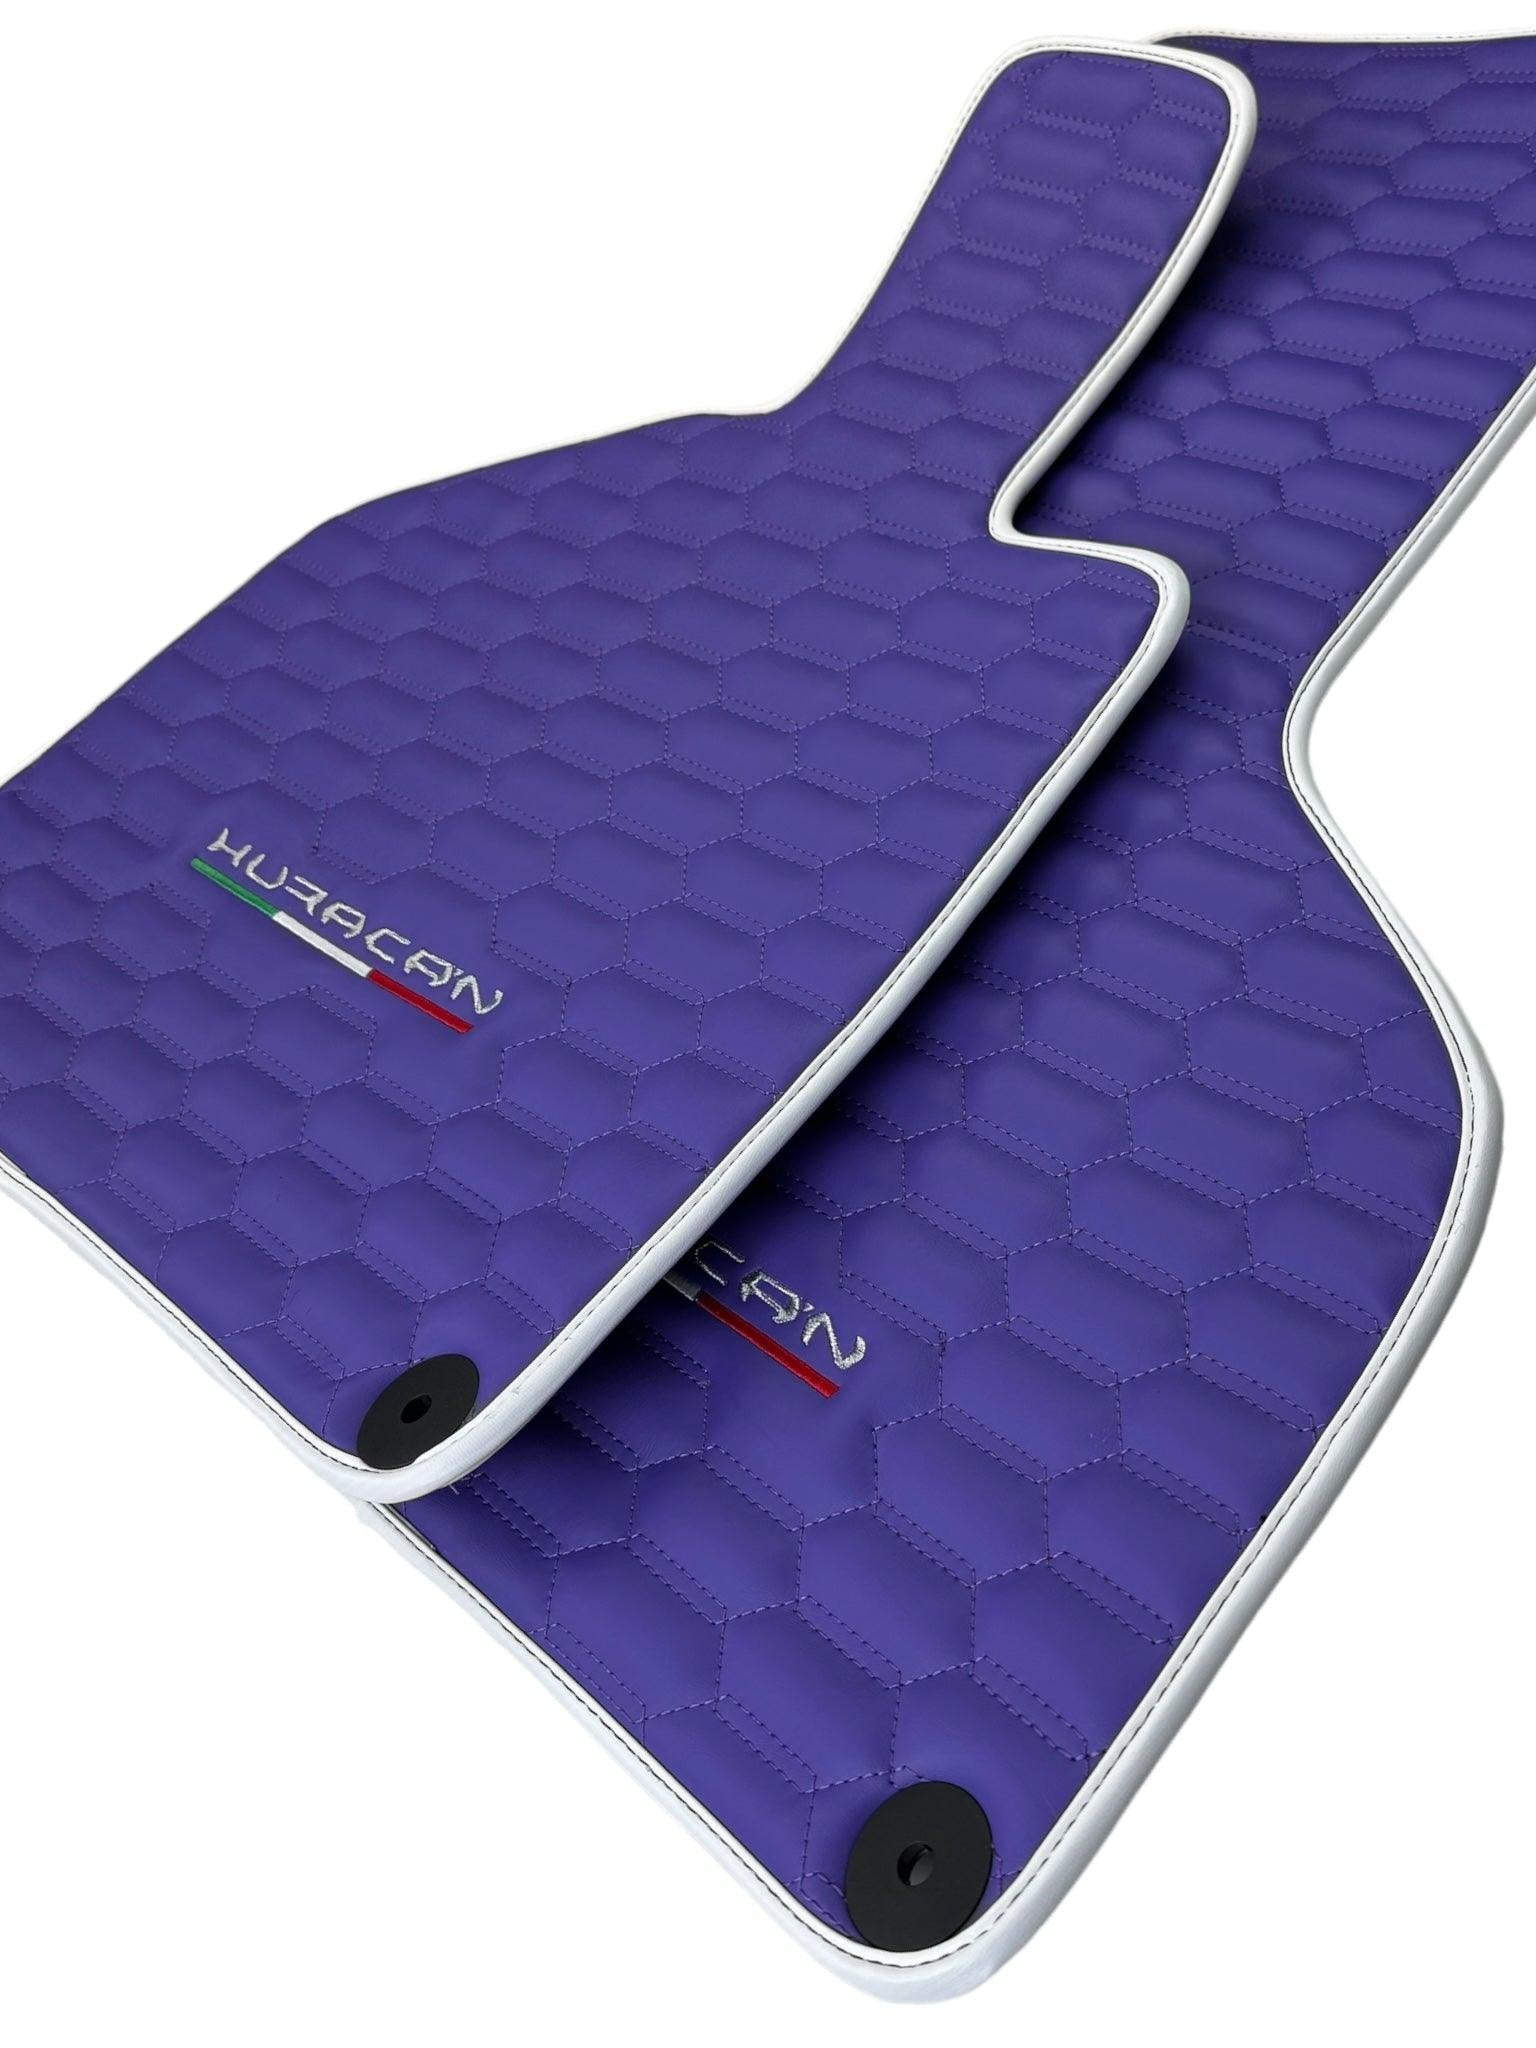 Purple Leather Floor Mats for Lamborghini Huracan with White Trim